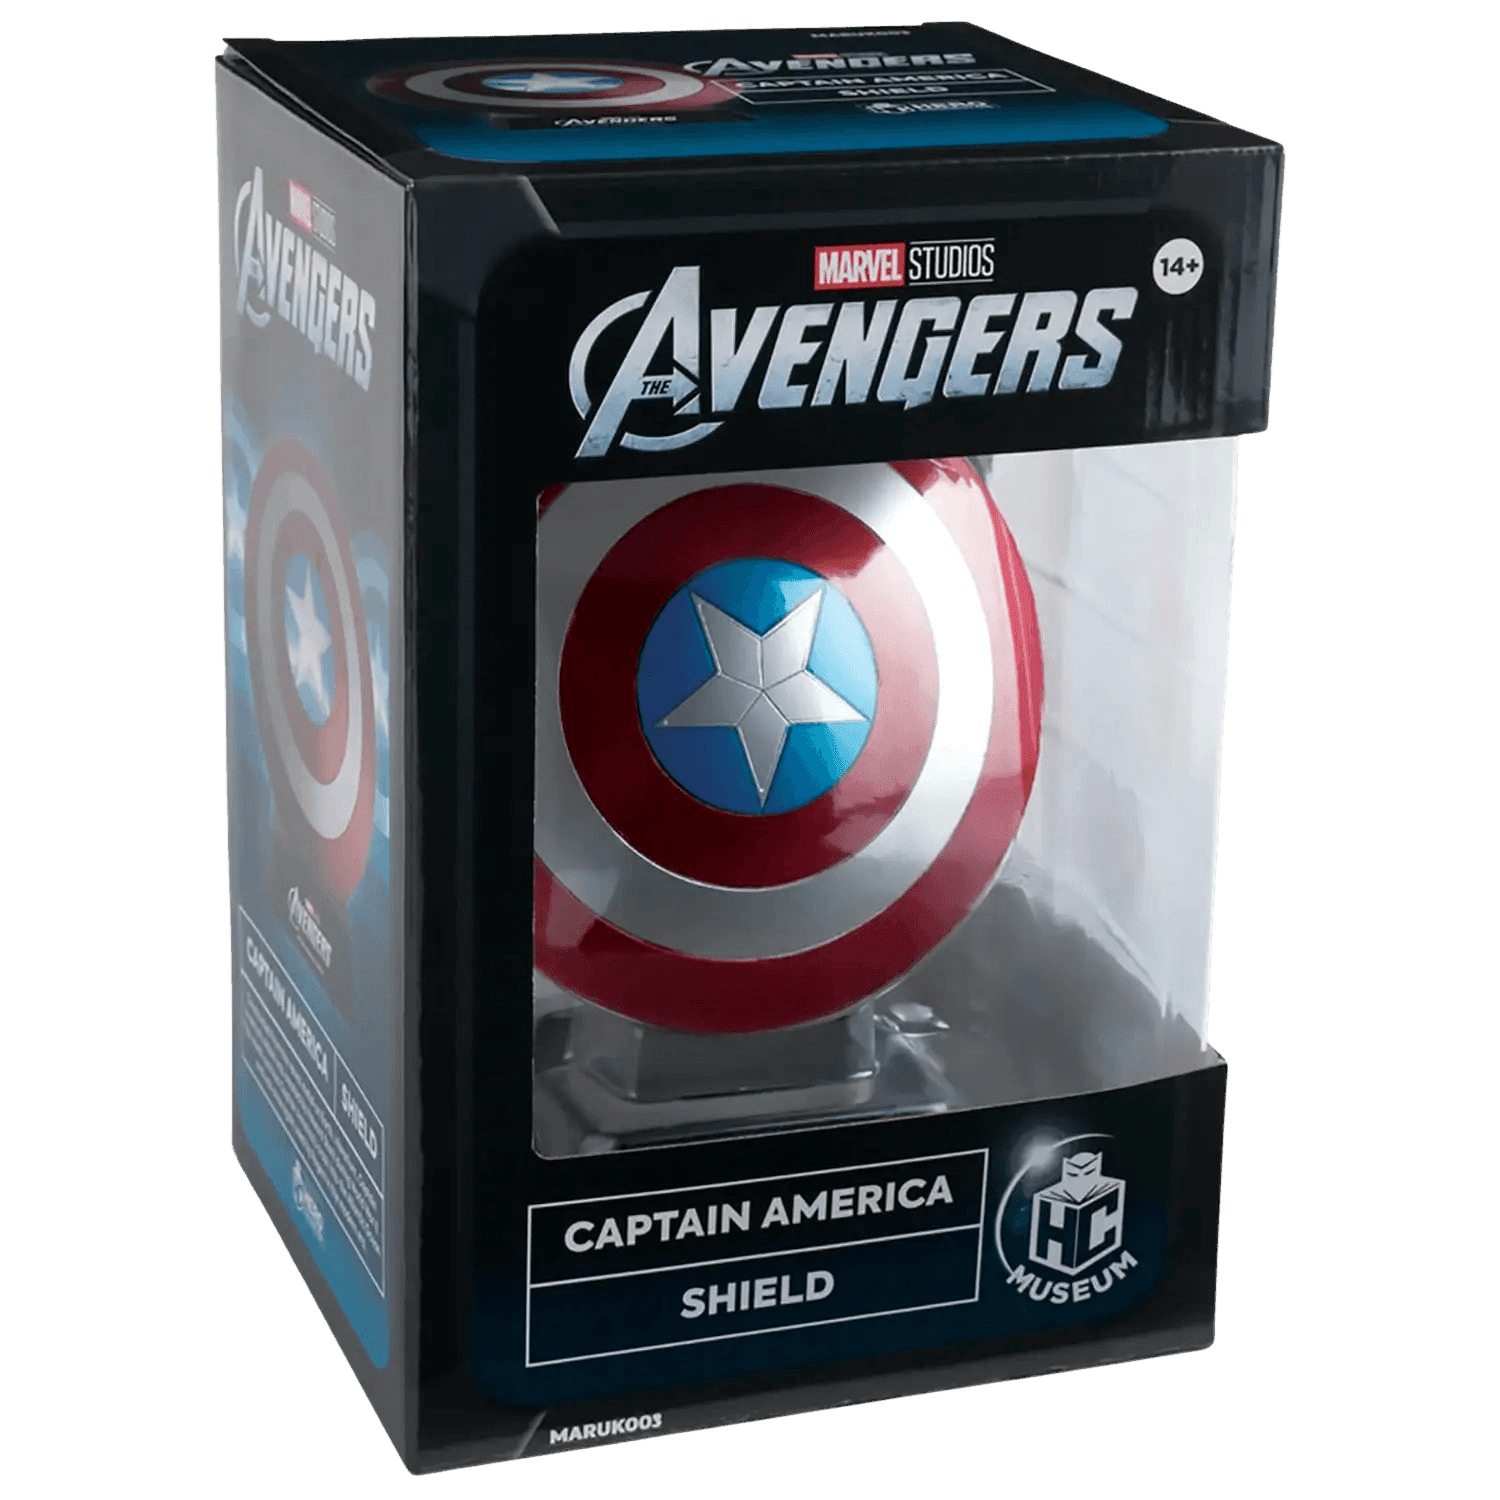 Captain America's Shield Replica - The Card Vault